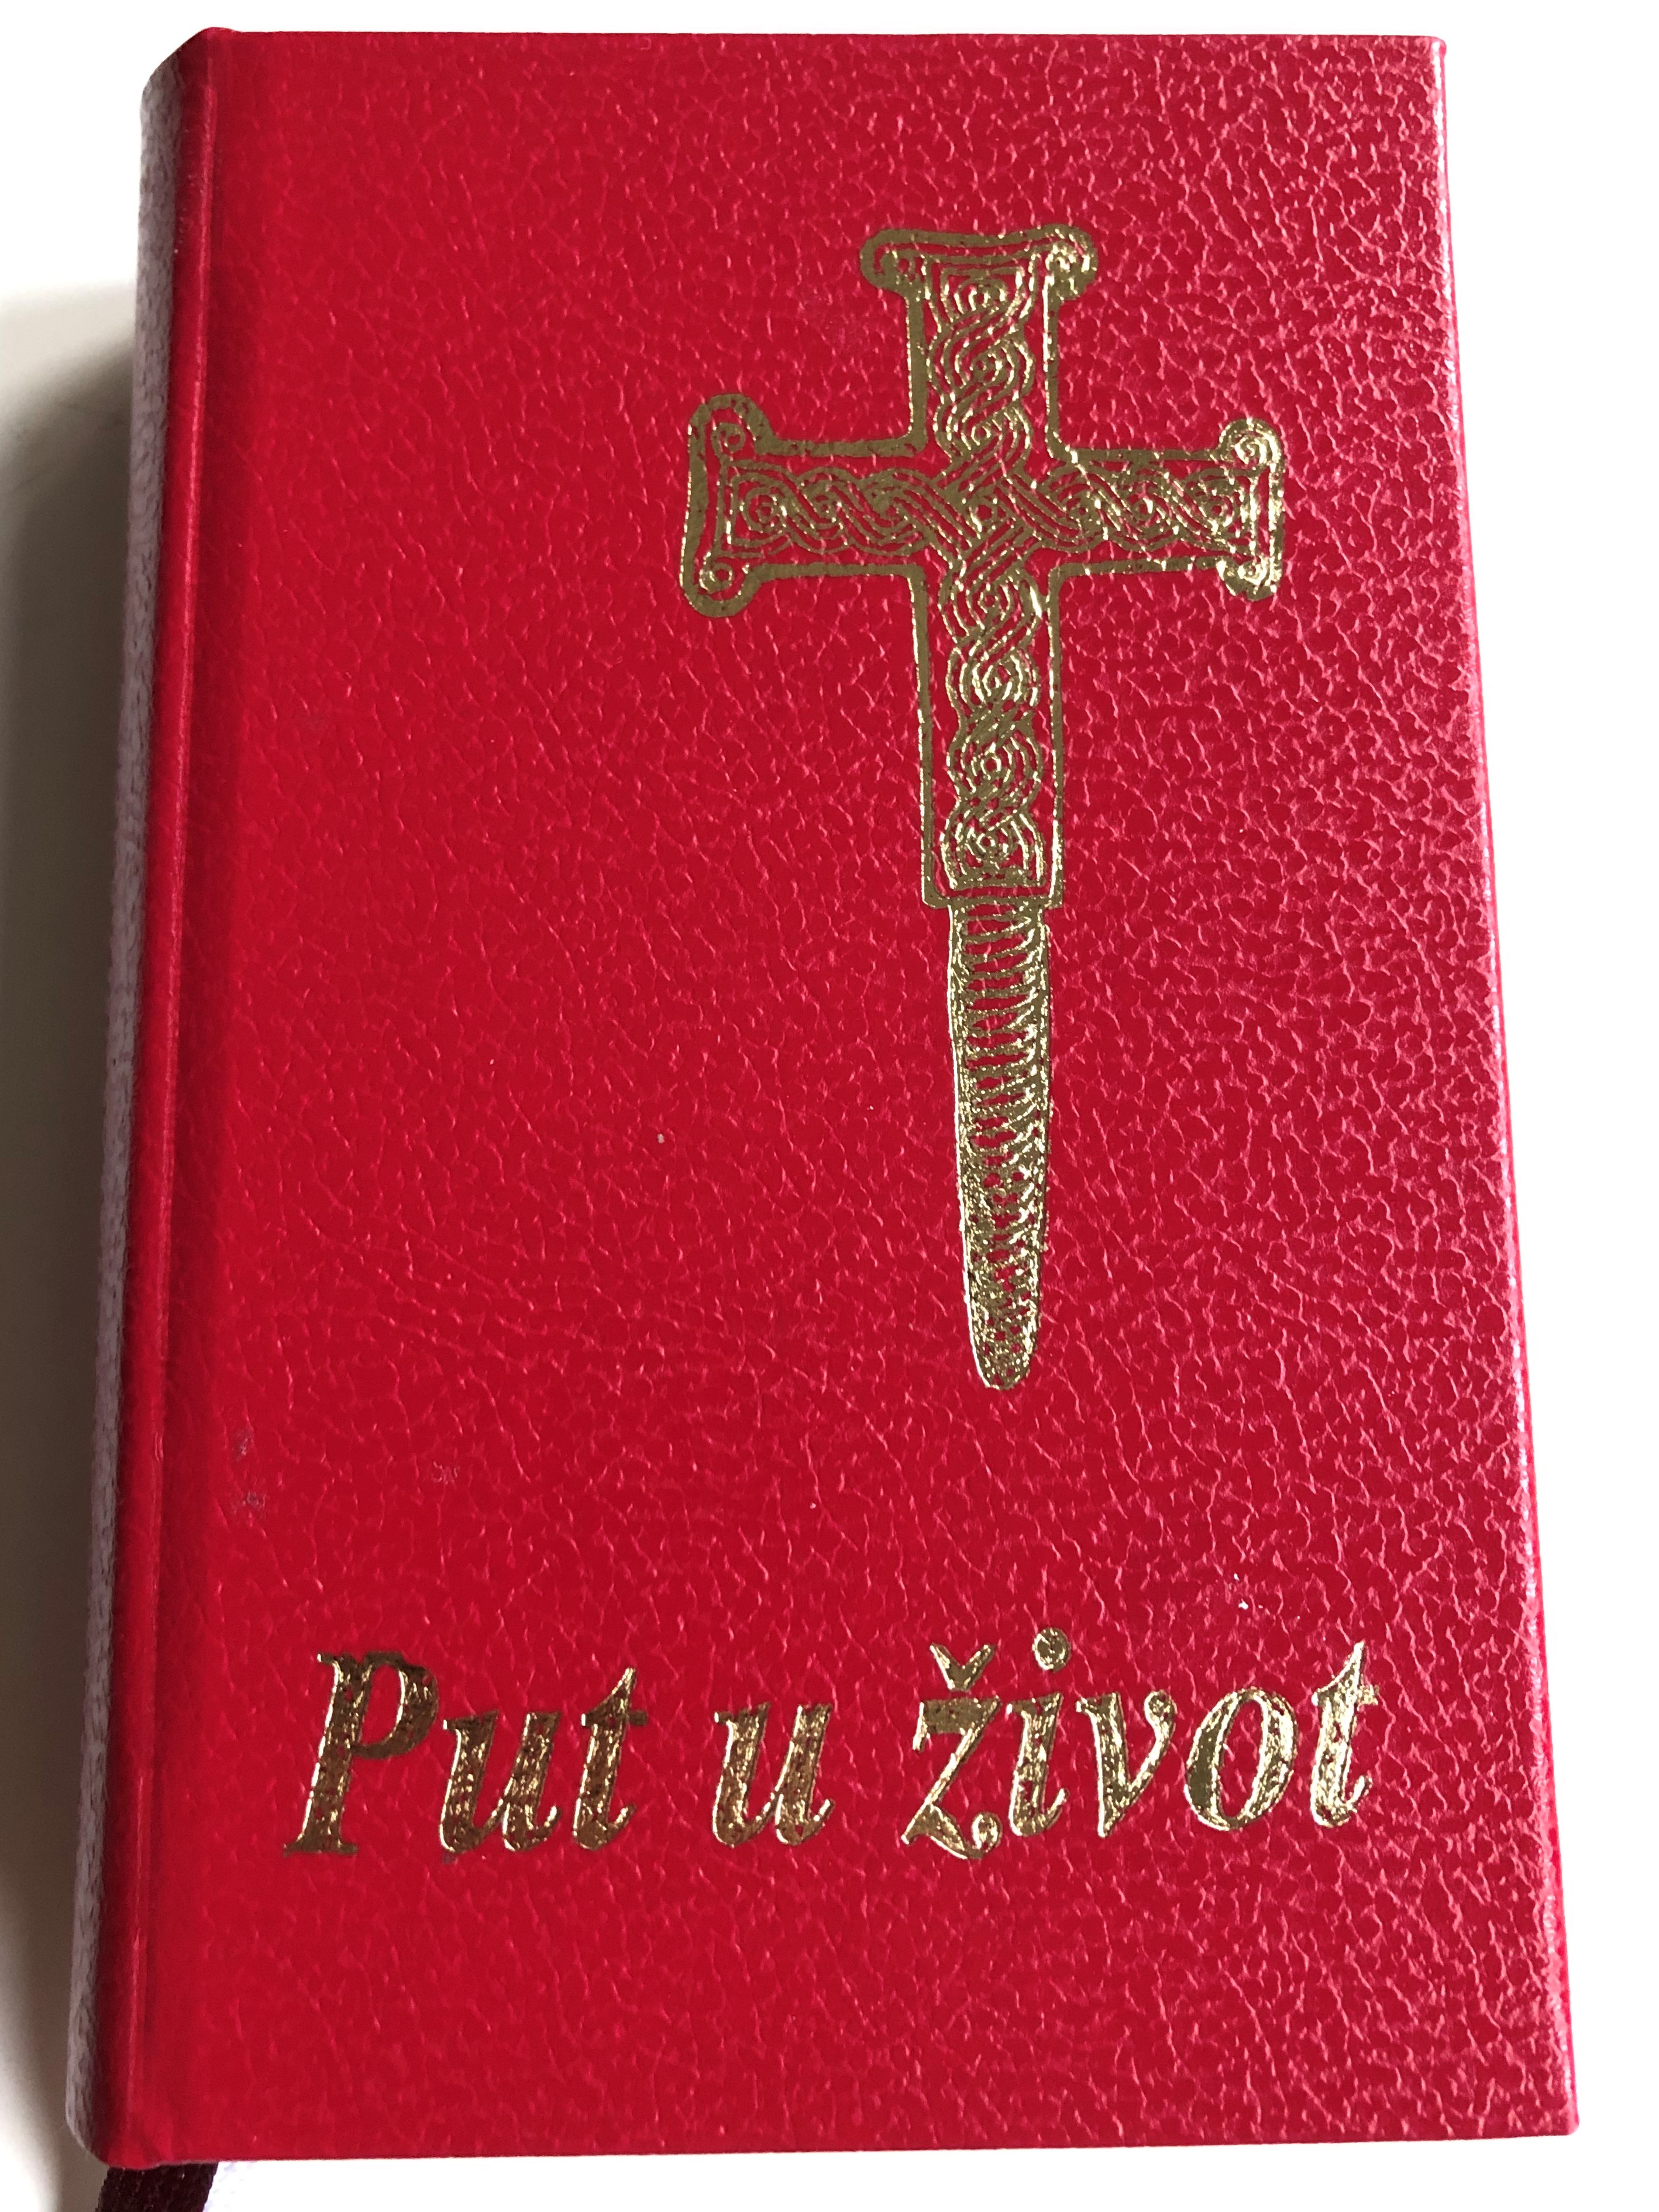 put-u-ivot-the-way-to-life-prayer-and-rites-hardcover-red-1.jpg